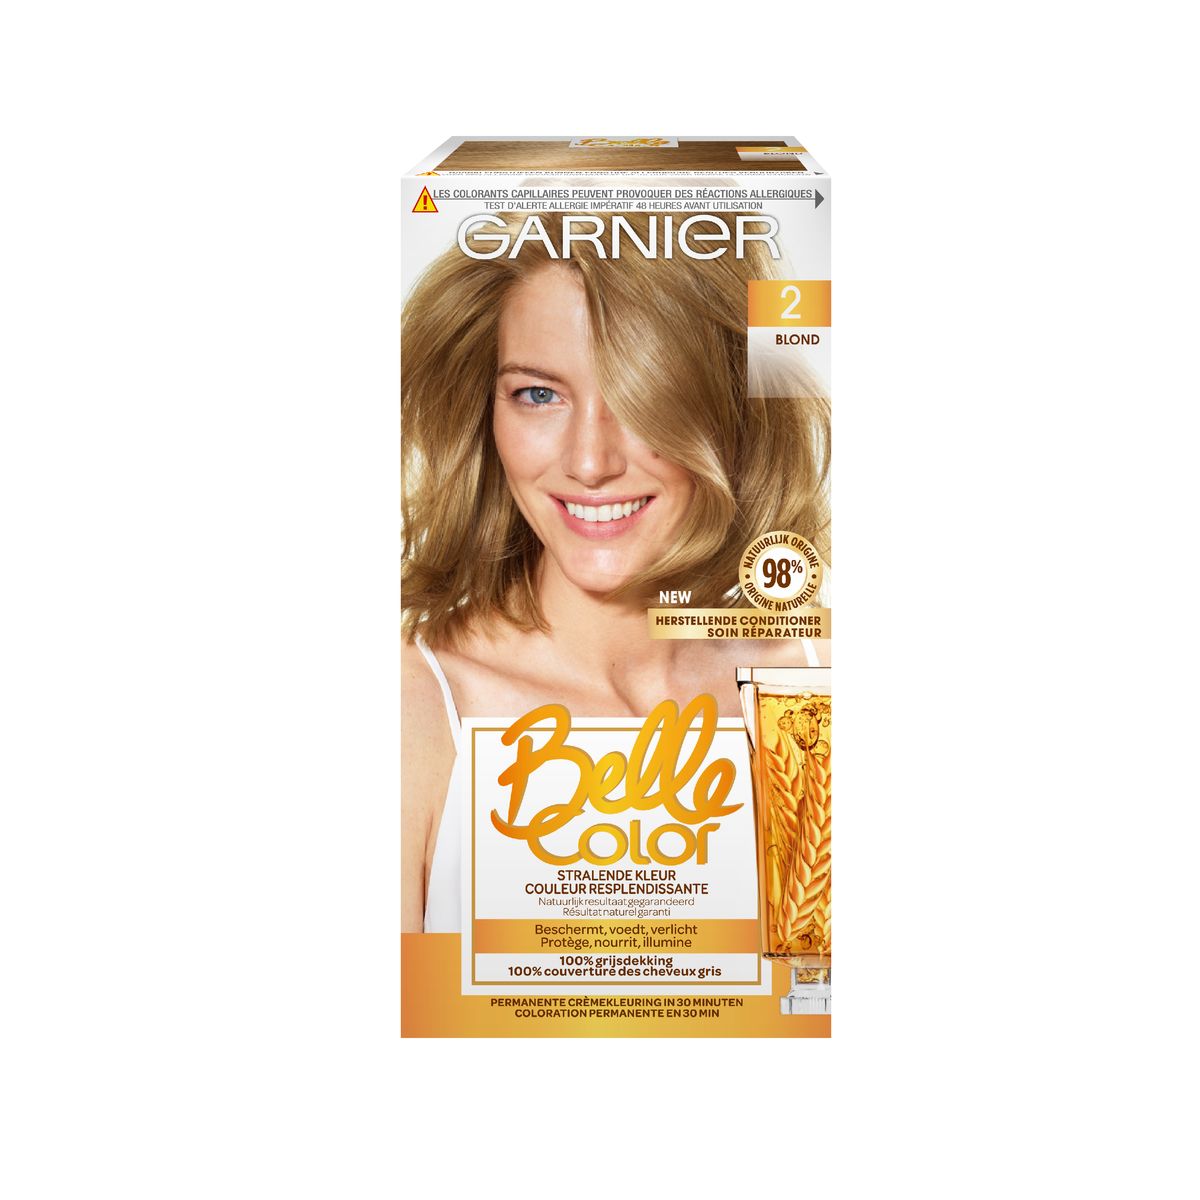 Garnier Belle Color 2 Blond Permanente Haarkleuring